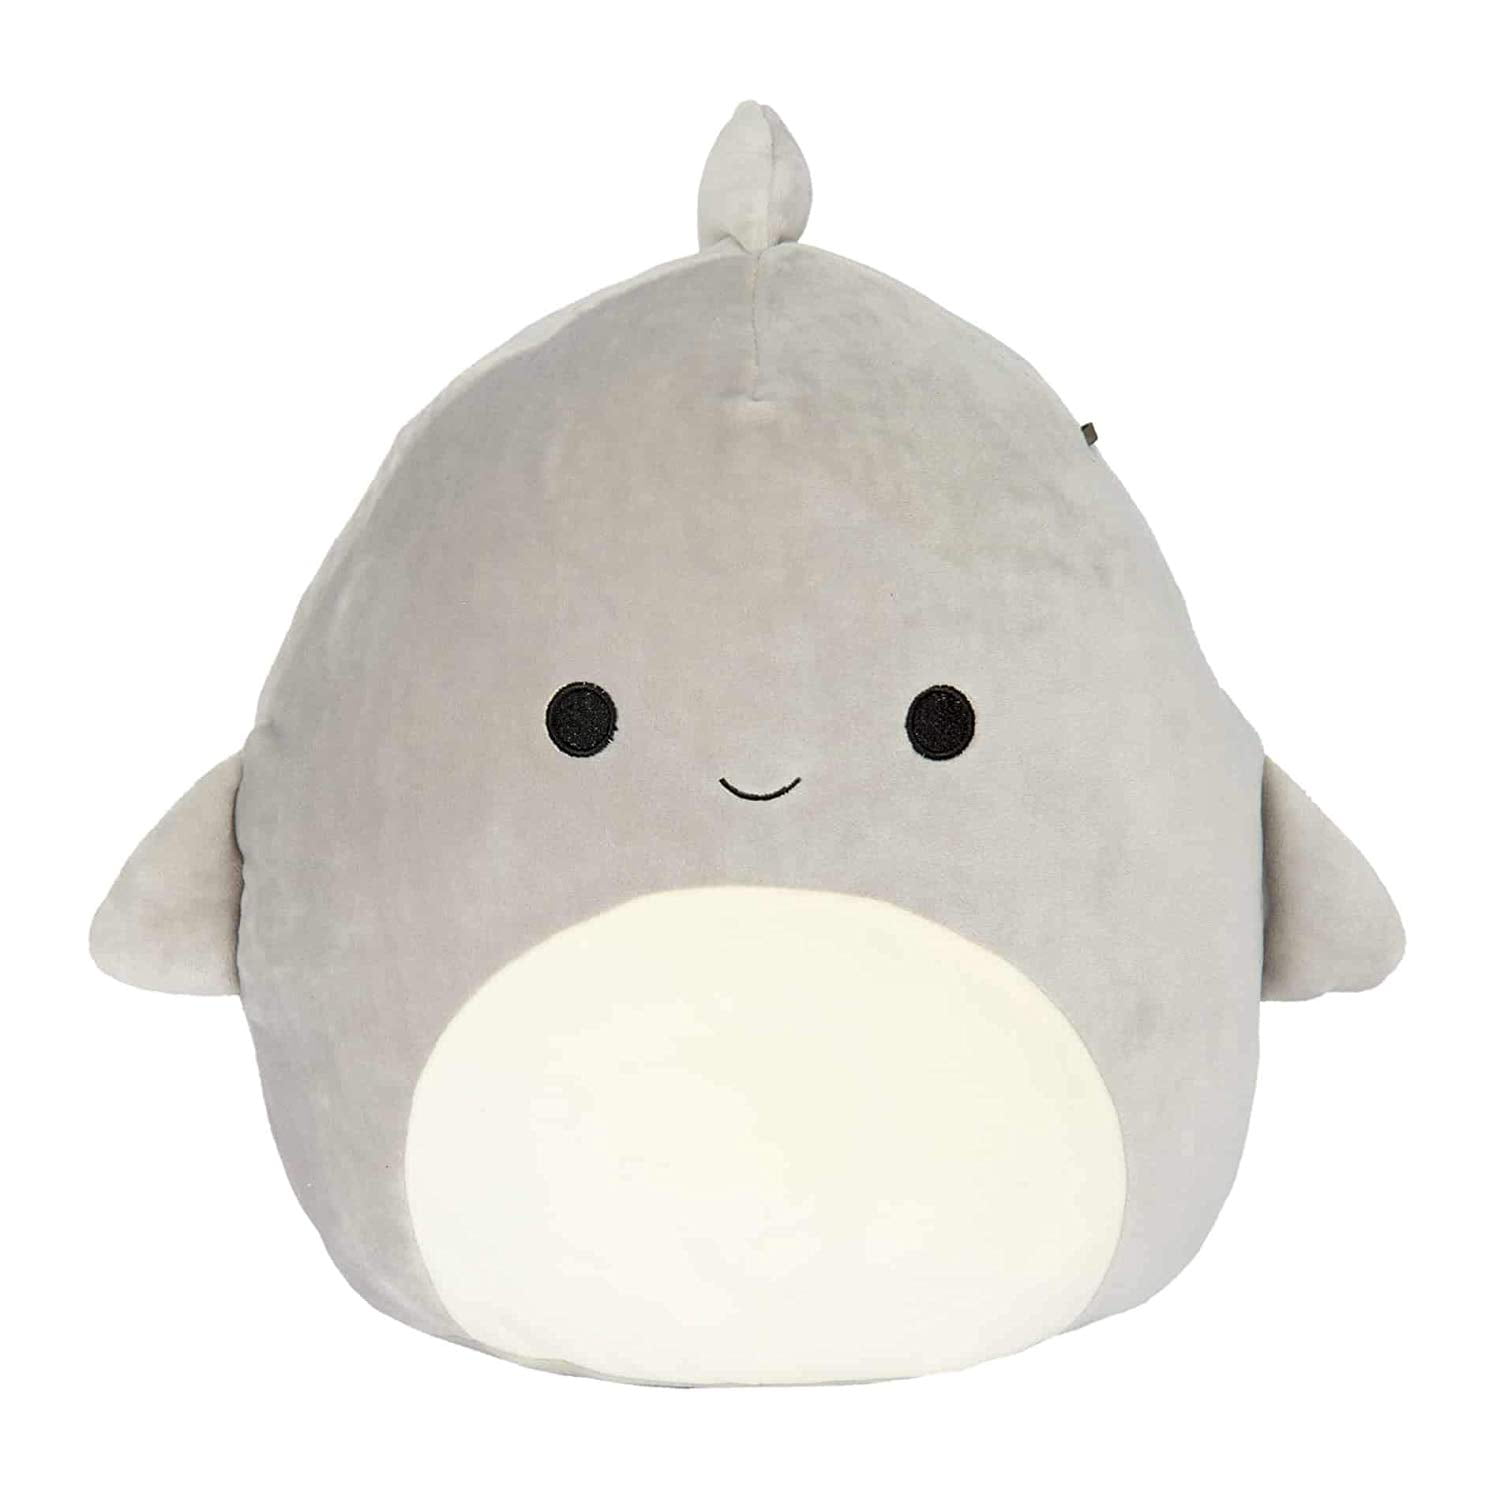 Squishmallows 8” Gordon the Shark Soft Plush Toy Teddy Bear 